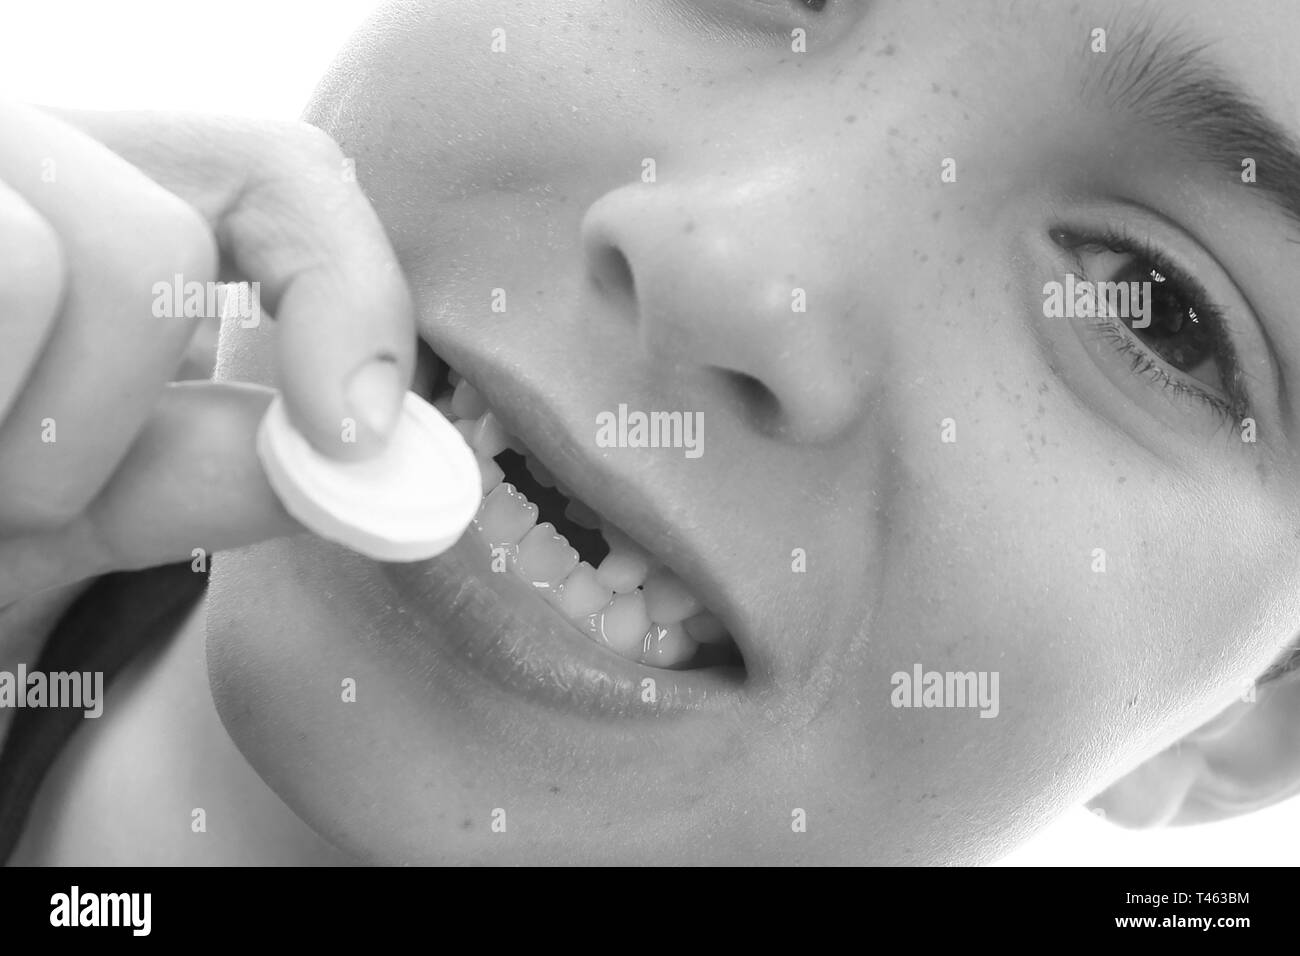 tooth loss, childrens dental hygiene Stock Photo